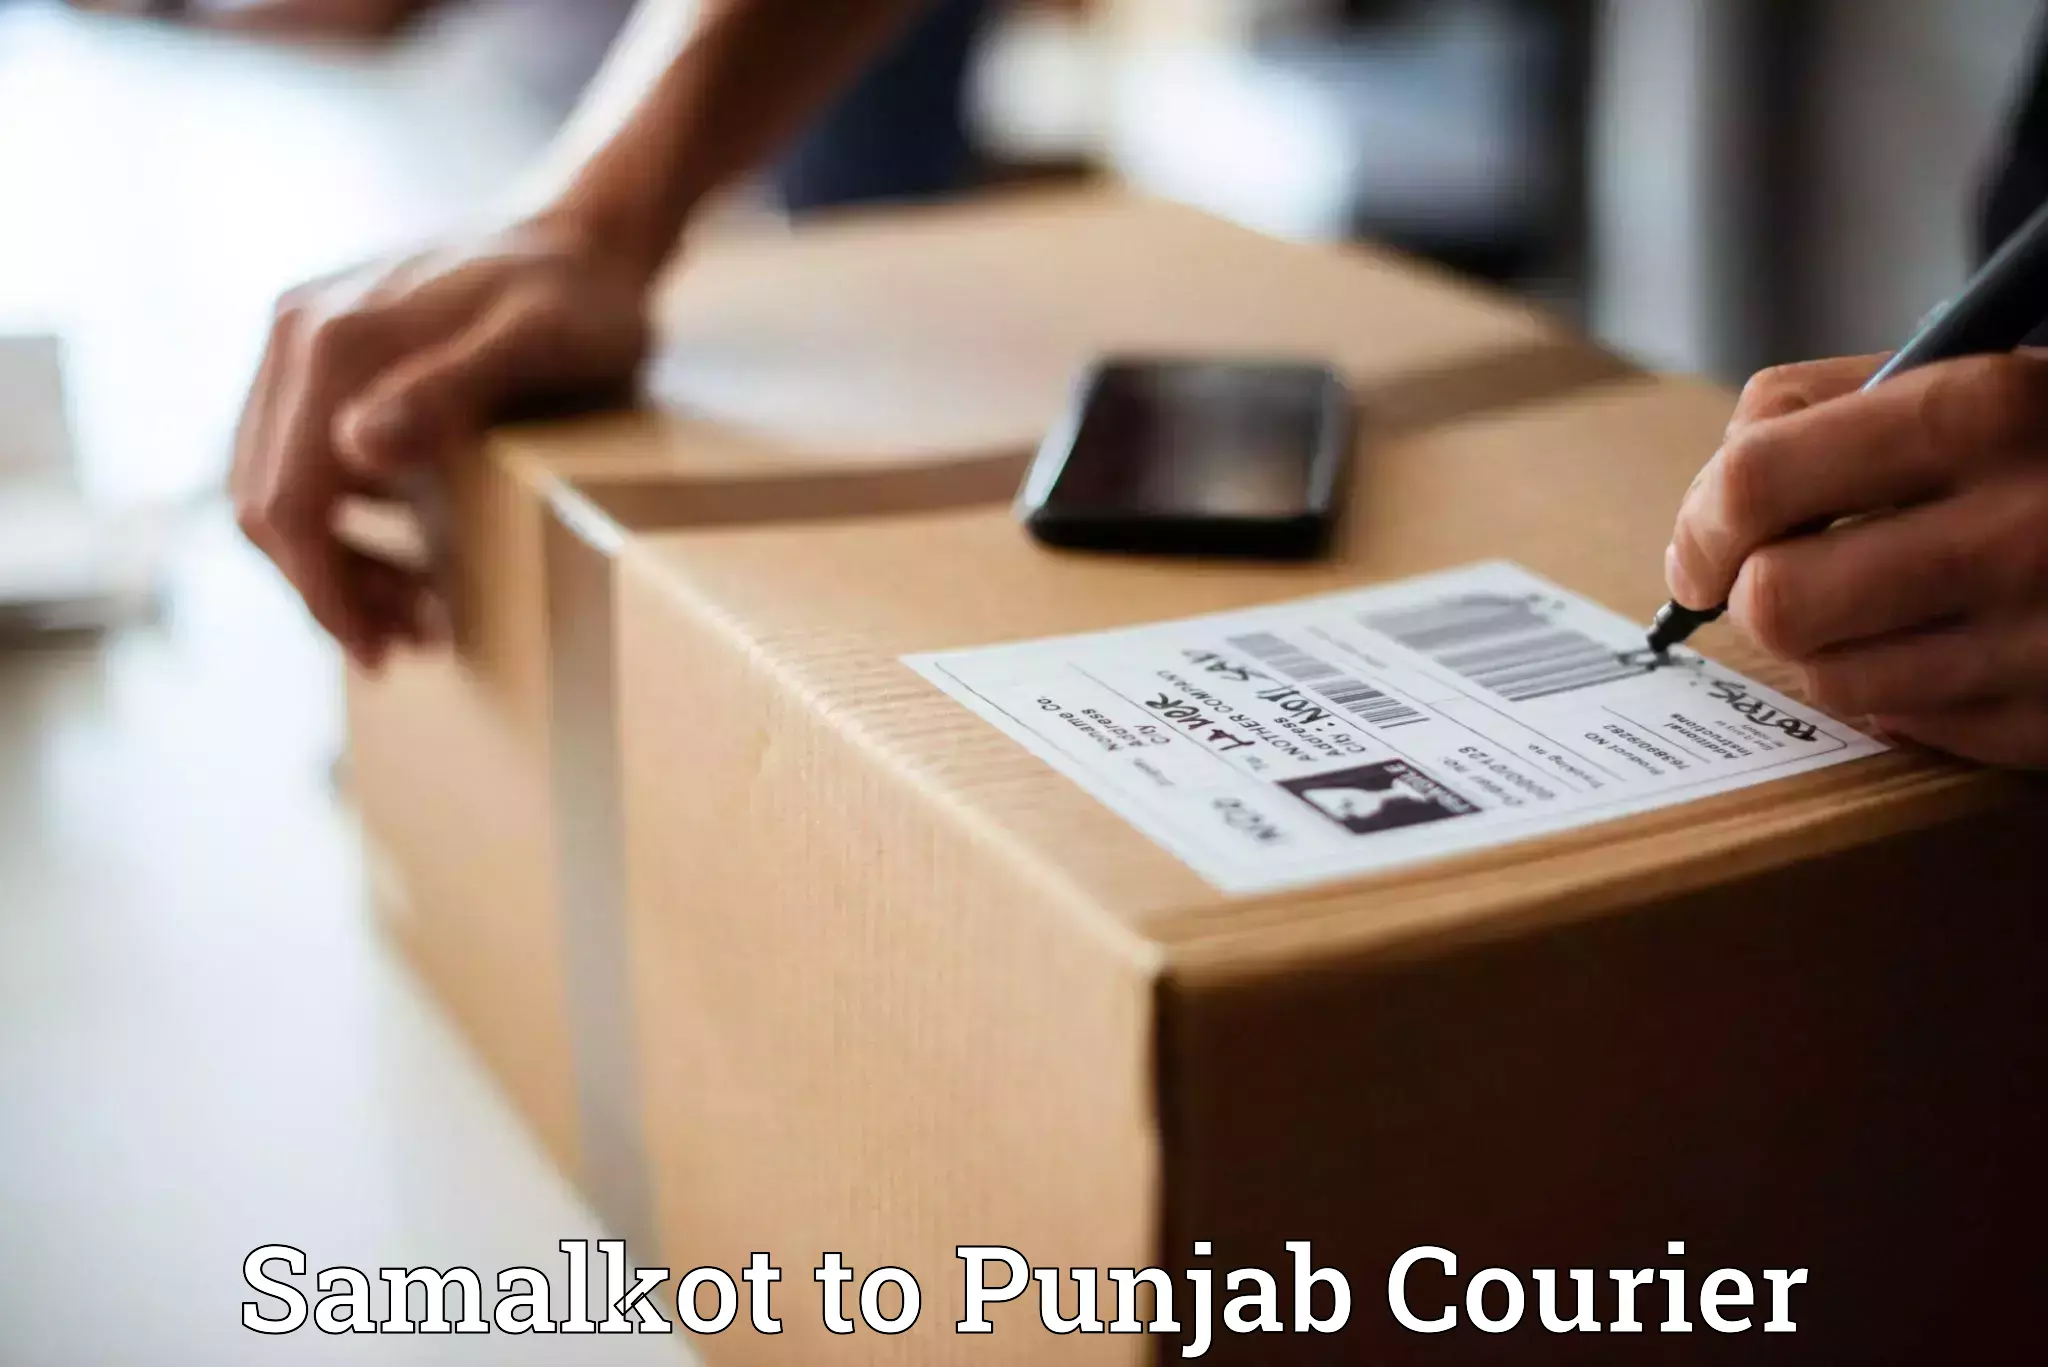 Courier service partnerships Samalkot to Sirhind Fatehgarh